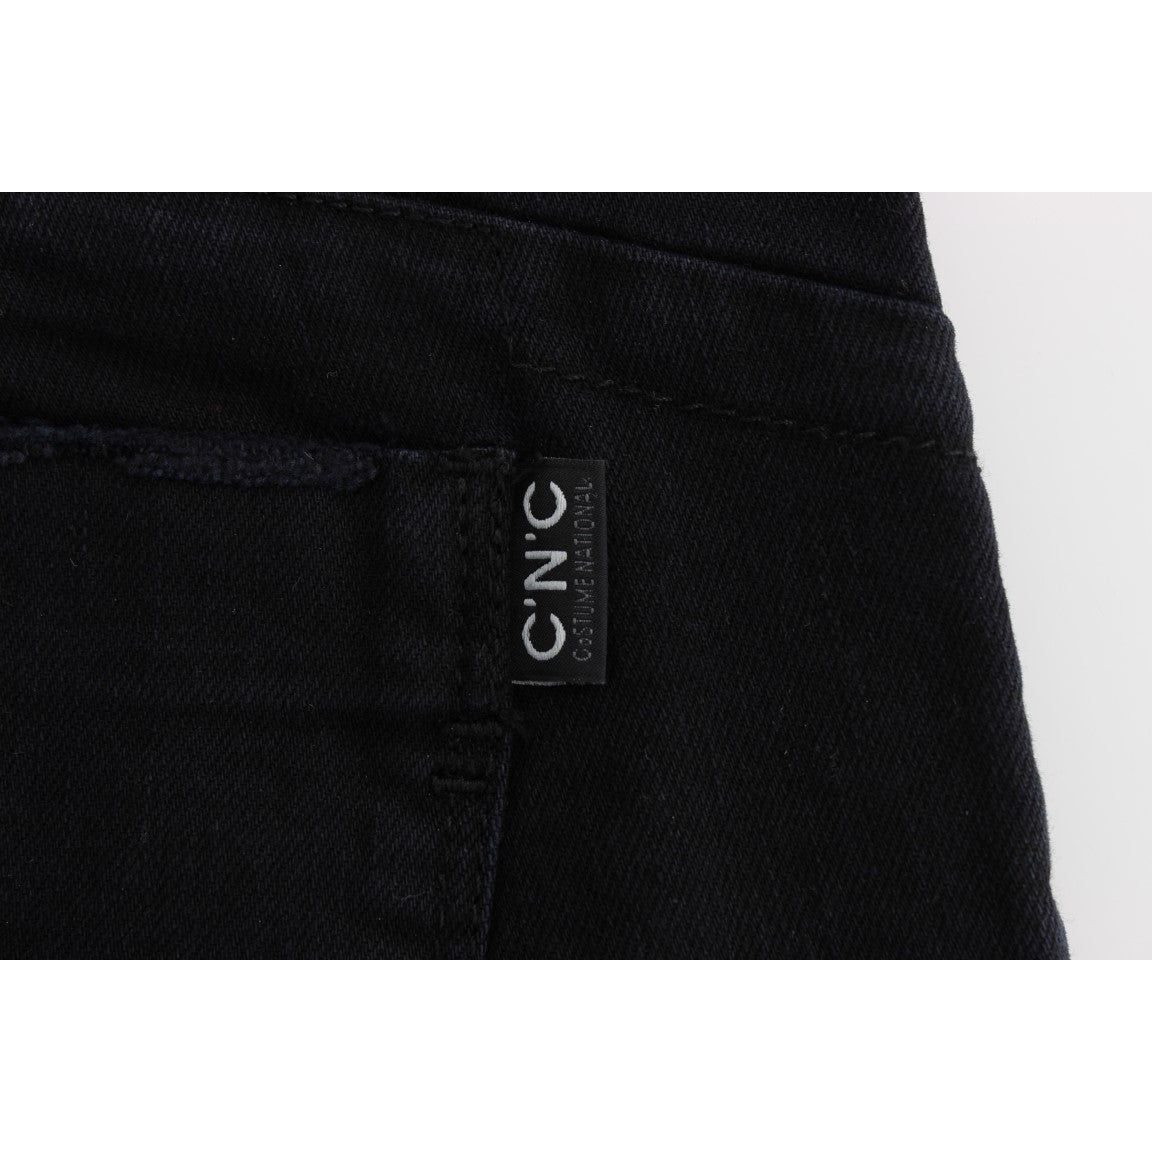 Costume National Sleek Slim Fit Black Denim Jeans Jeans & Pants black-cotton-slim-fit-cropped-jeans 318519-black-cotton-slim-fit-cropped-jeans-7.jpg